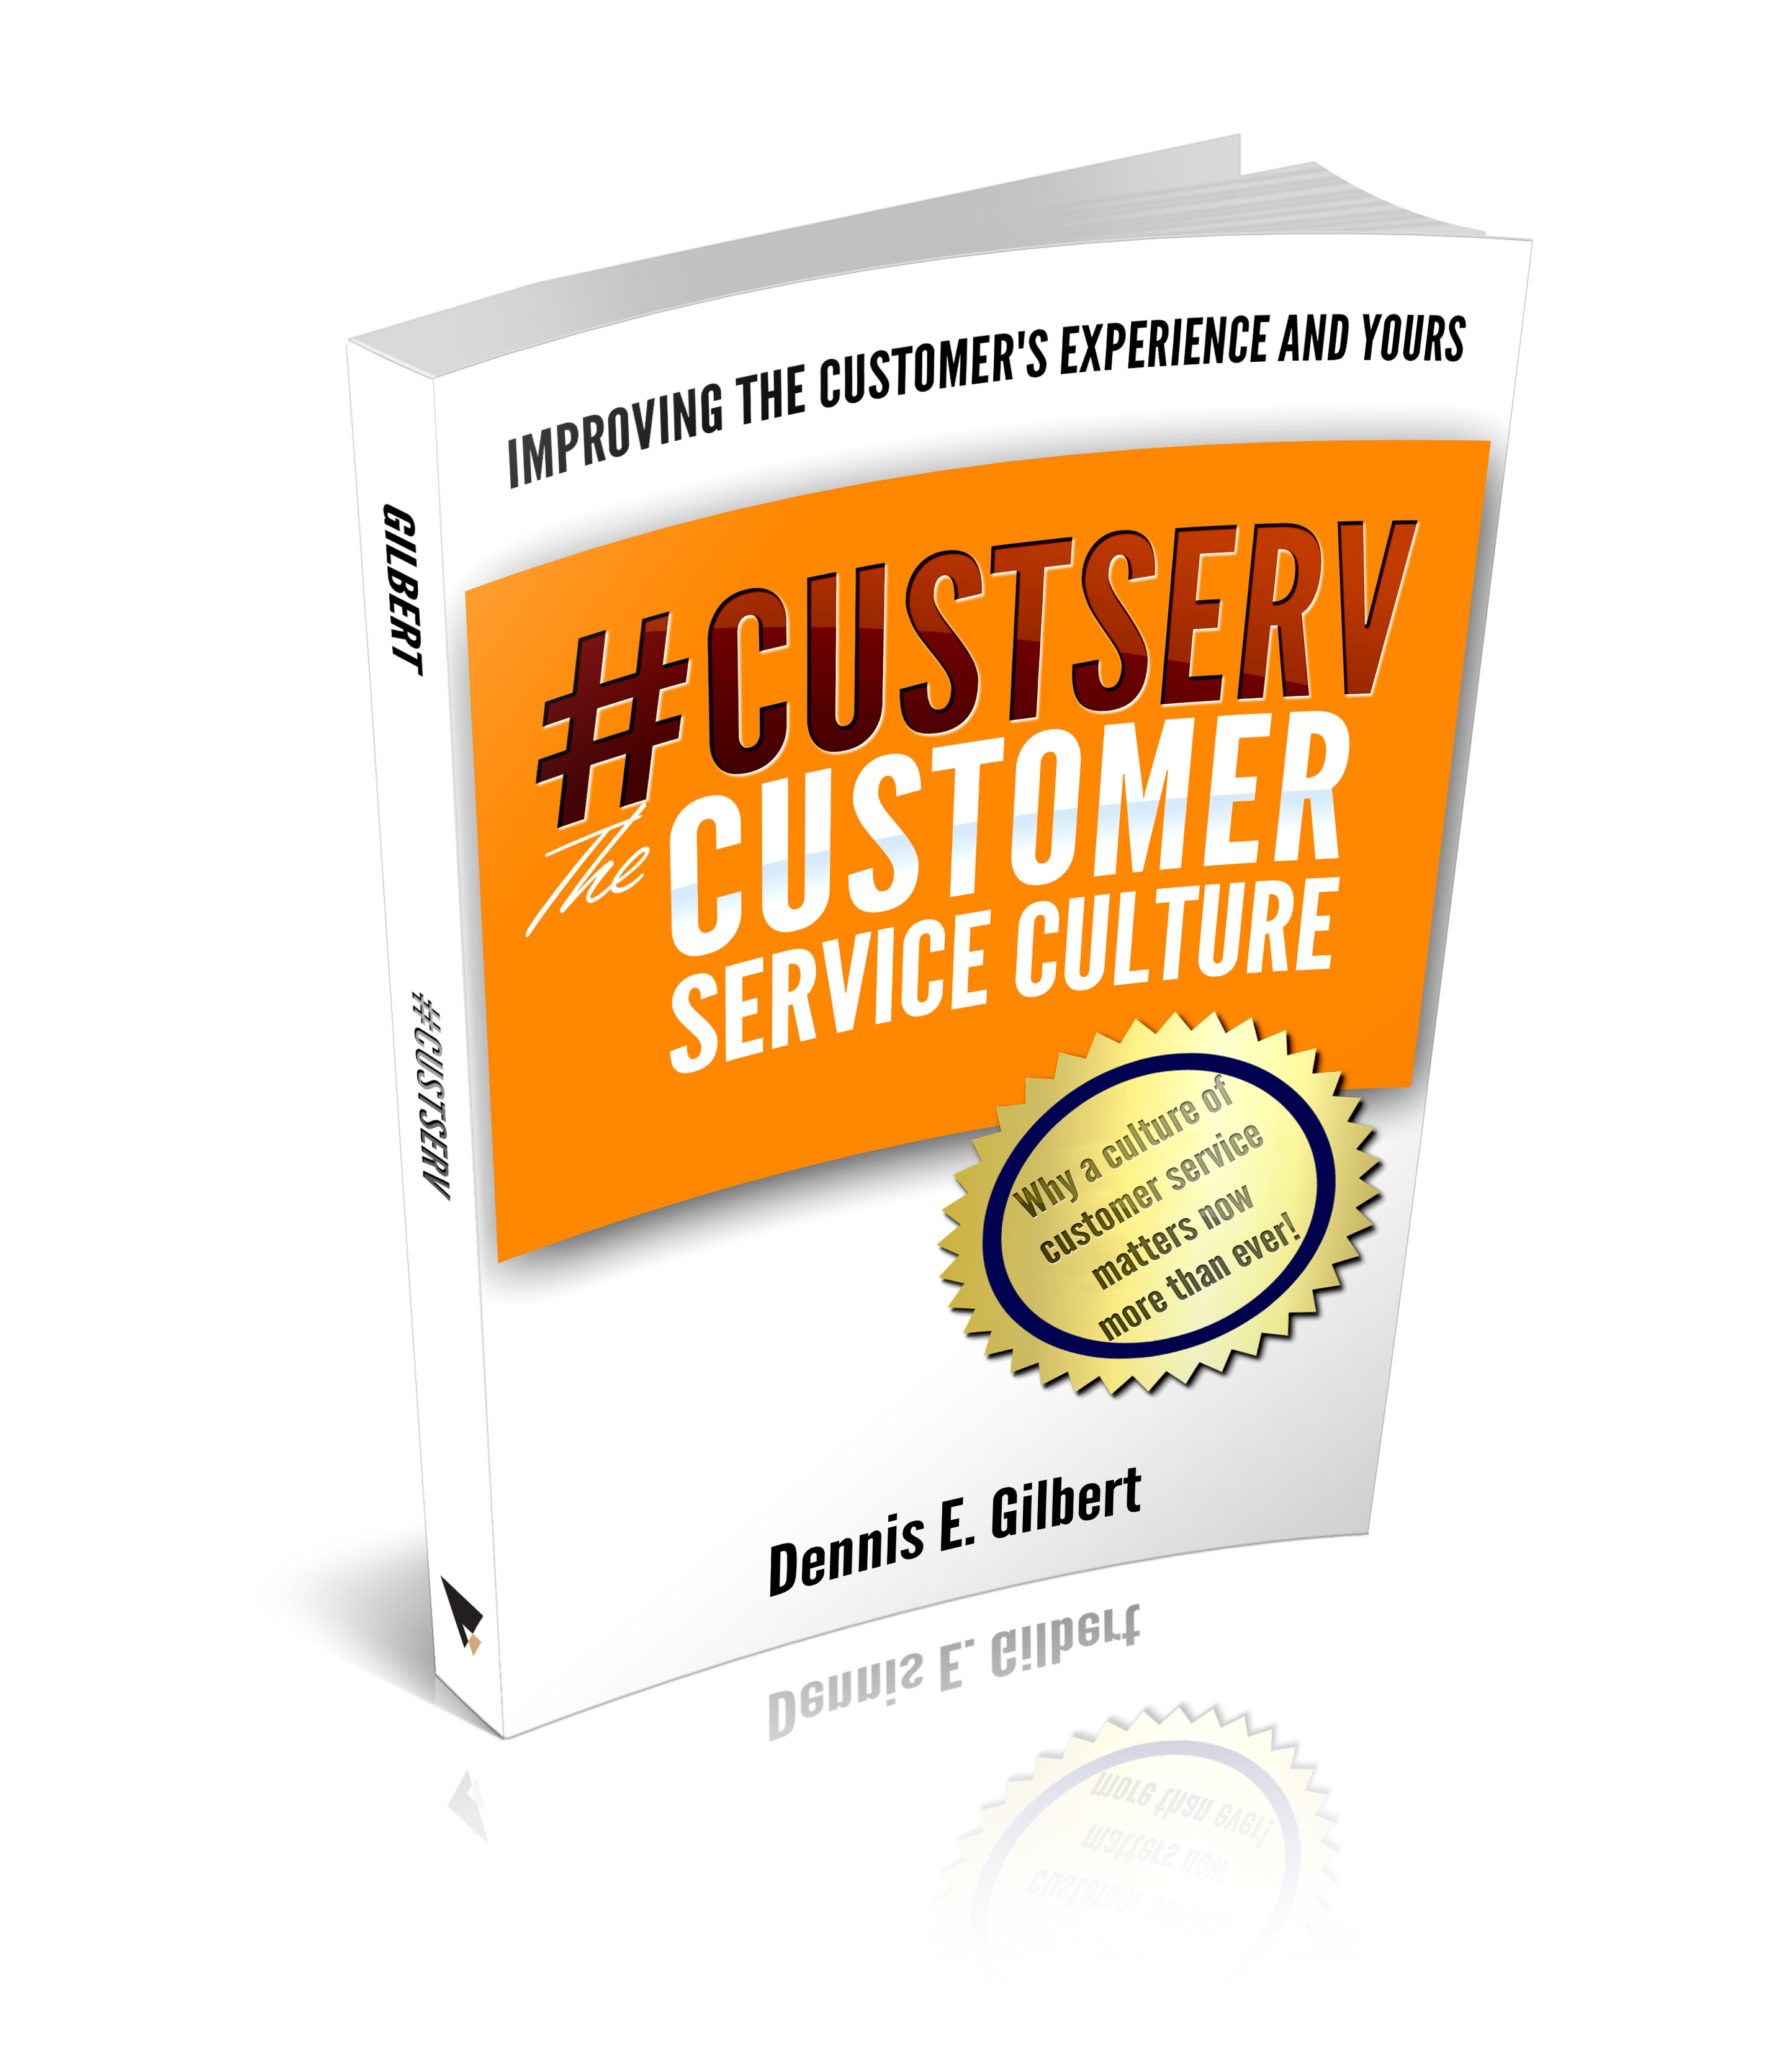 Customer service culture